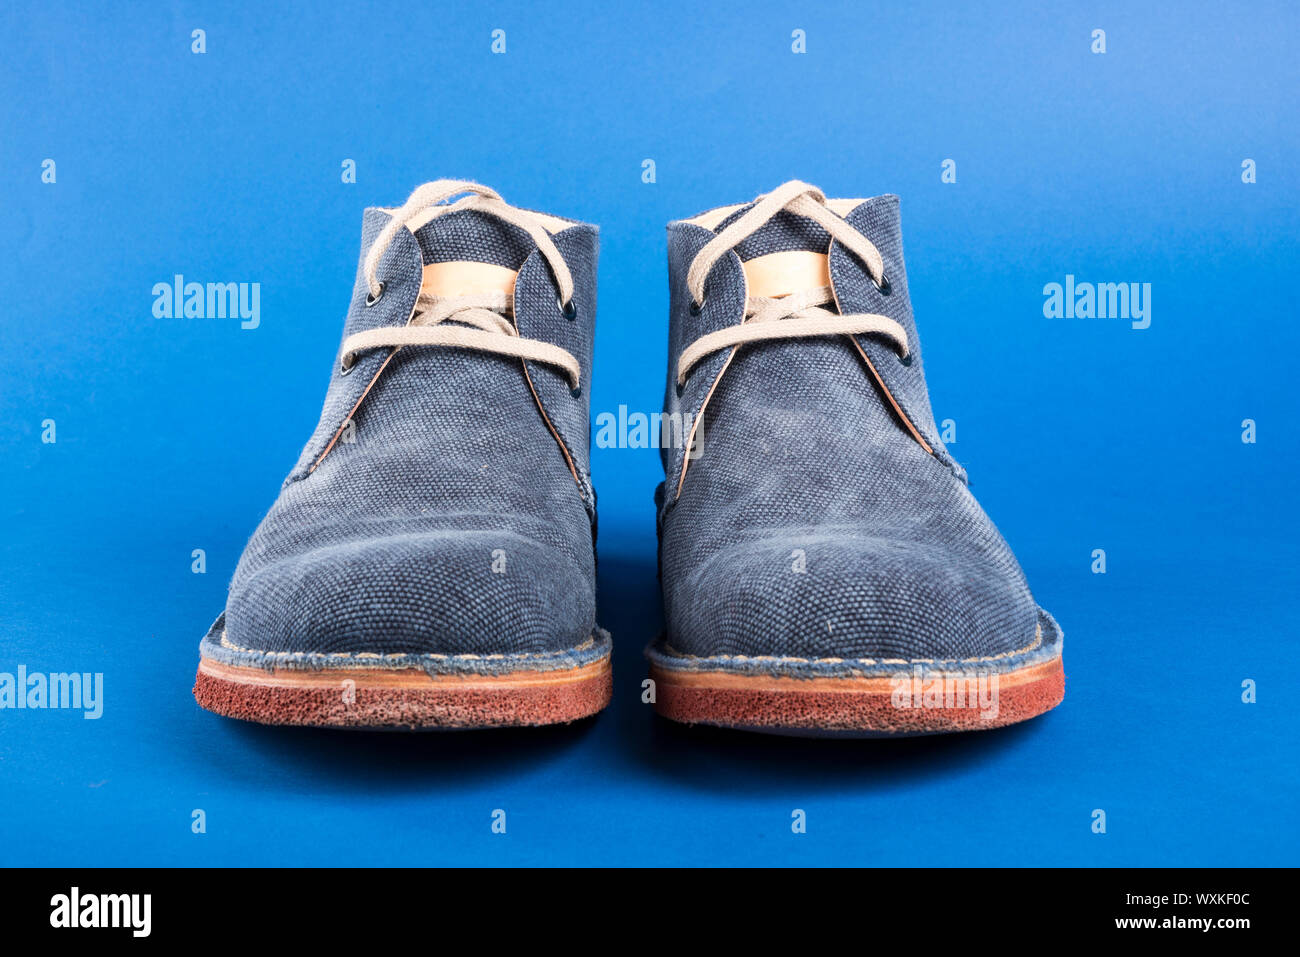 Men's denim shoe on a blue background Stock Photo - Alamy